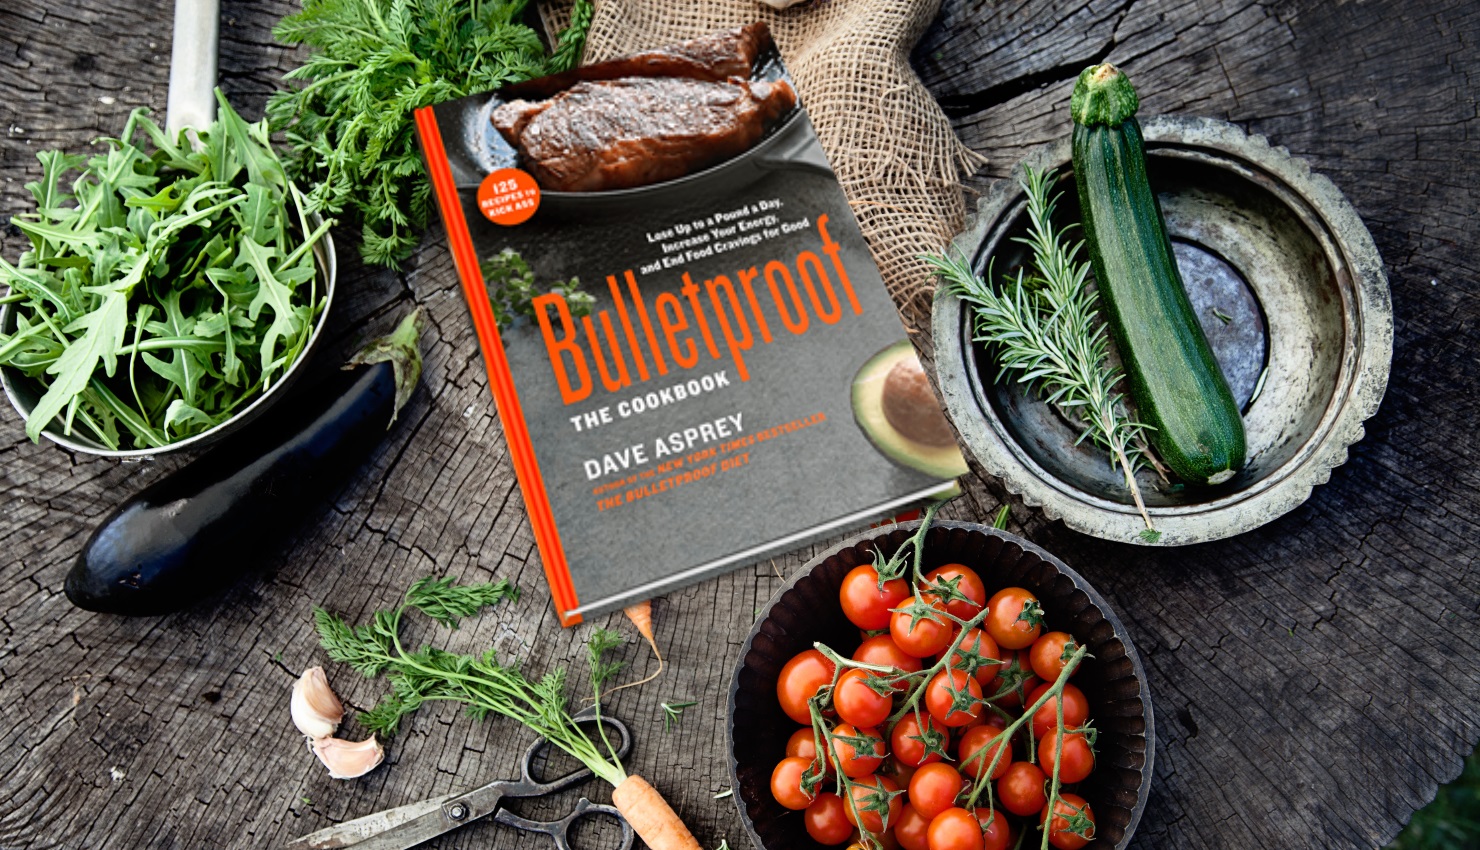 Bulletproof Cookbook Recipes and More